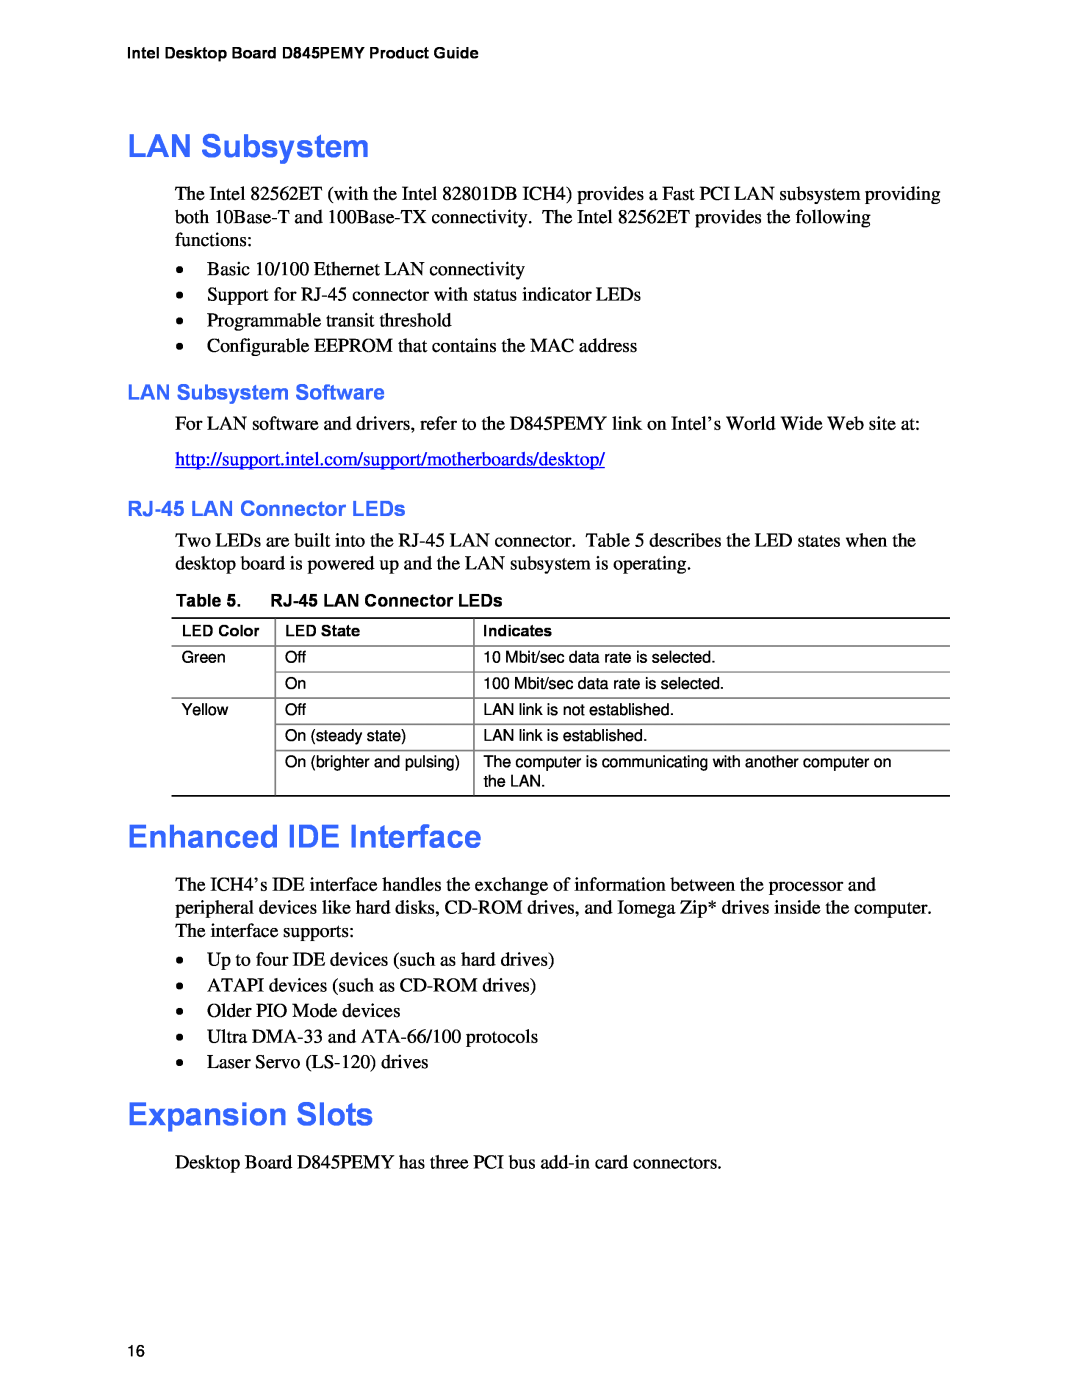 Intel D845PEMY manual Enhanced IDE Interface, Expansion Slots, LAN Subsystem Software, RJ-45 LAN Connector LEDs 